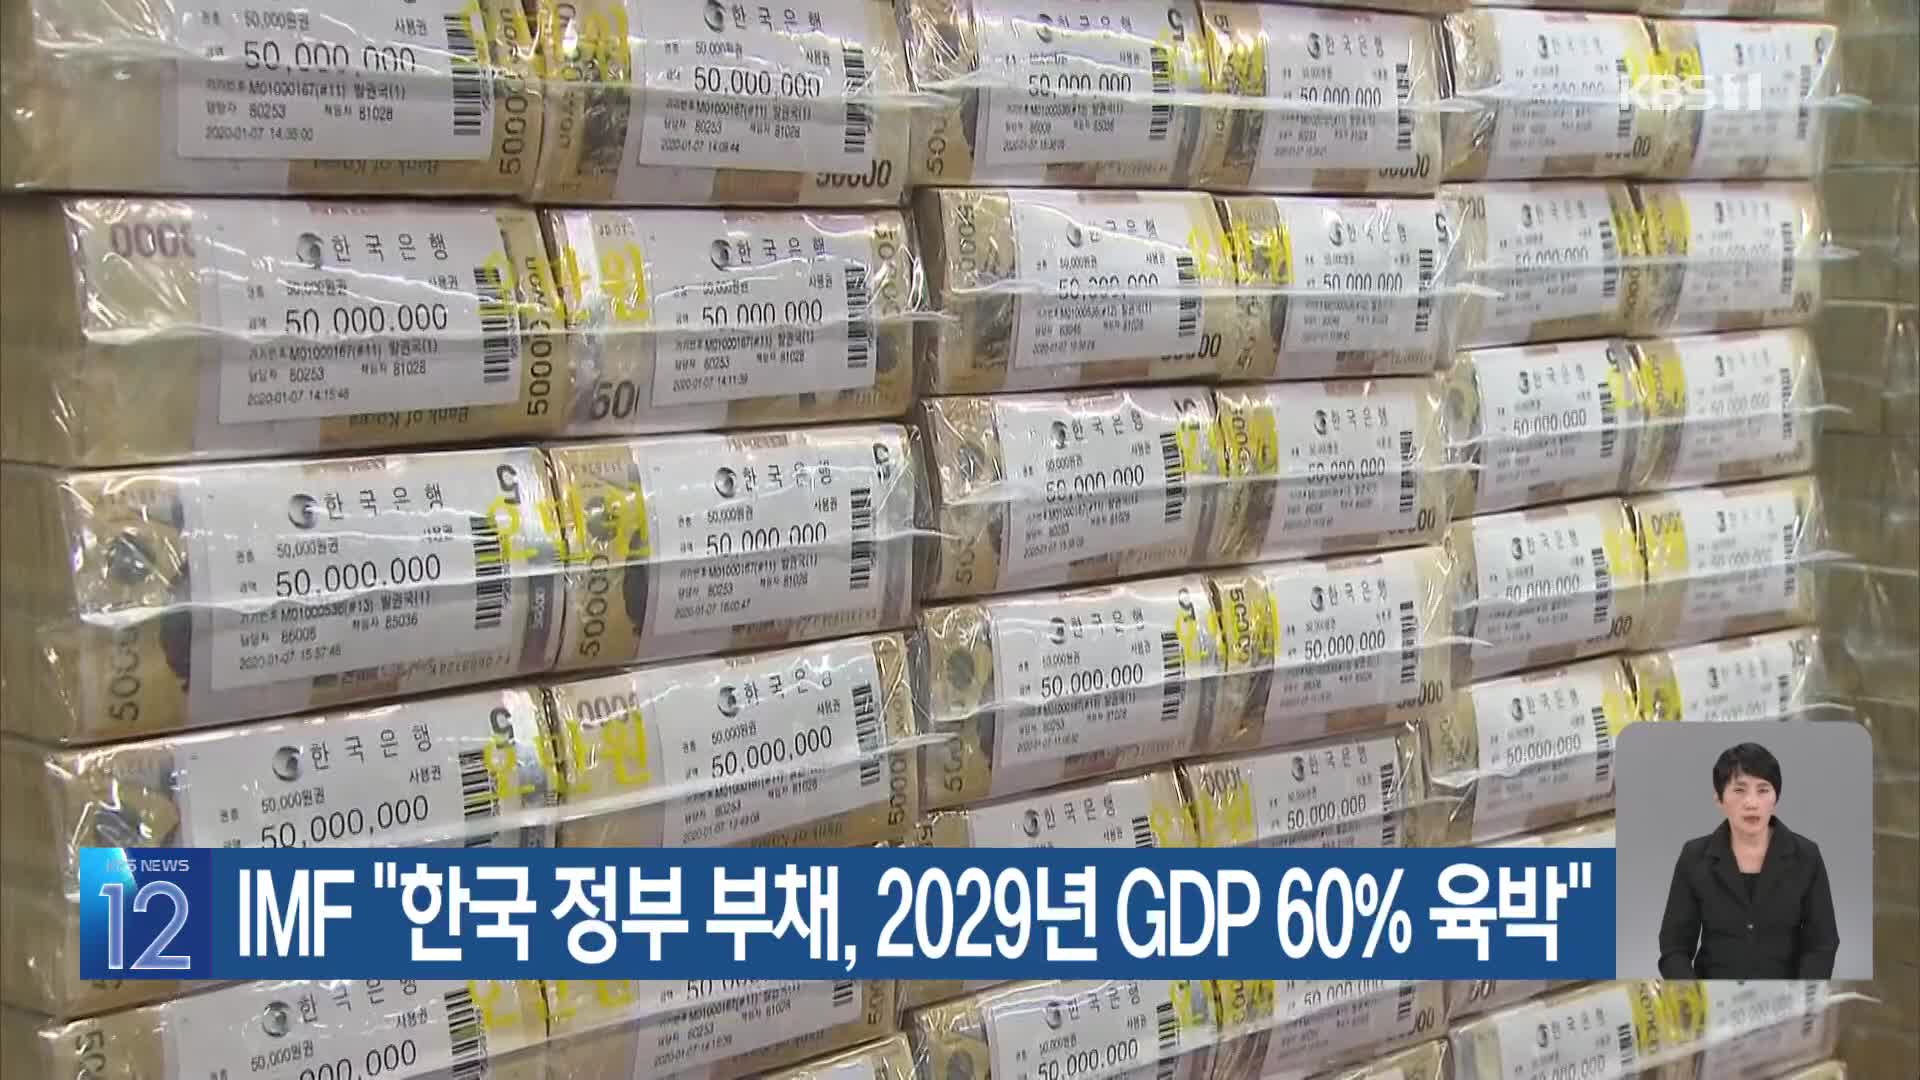 IMF “한국 정부 부채, 2029년 GDP 60% 육박”